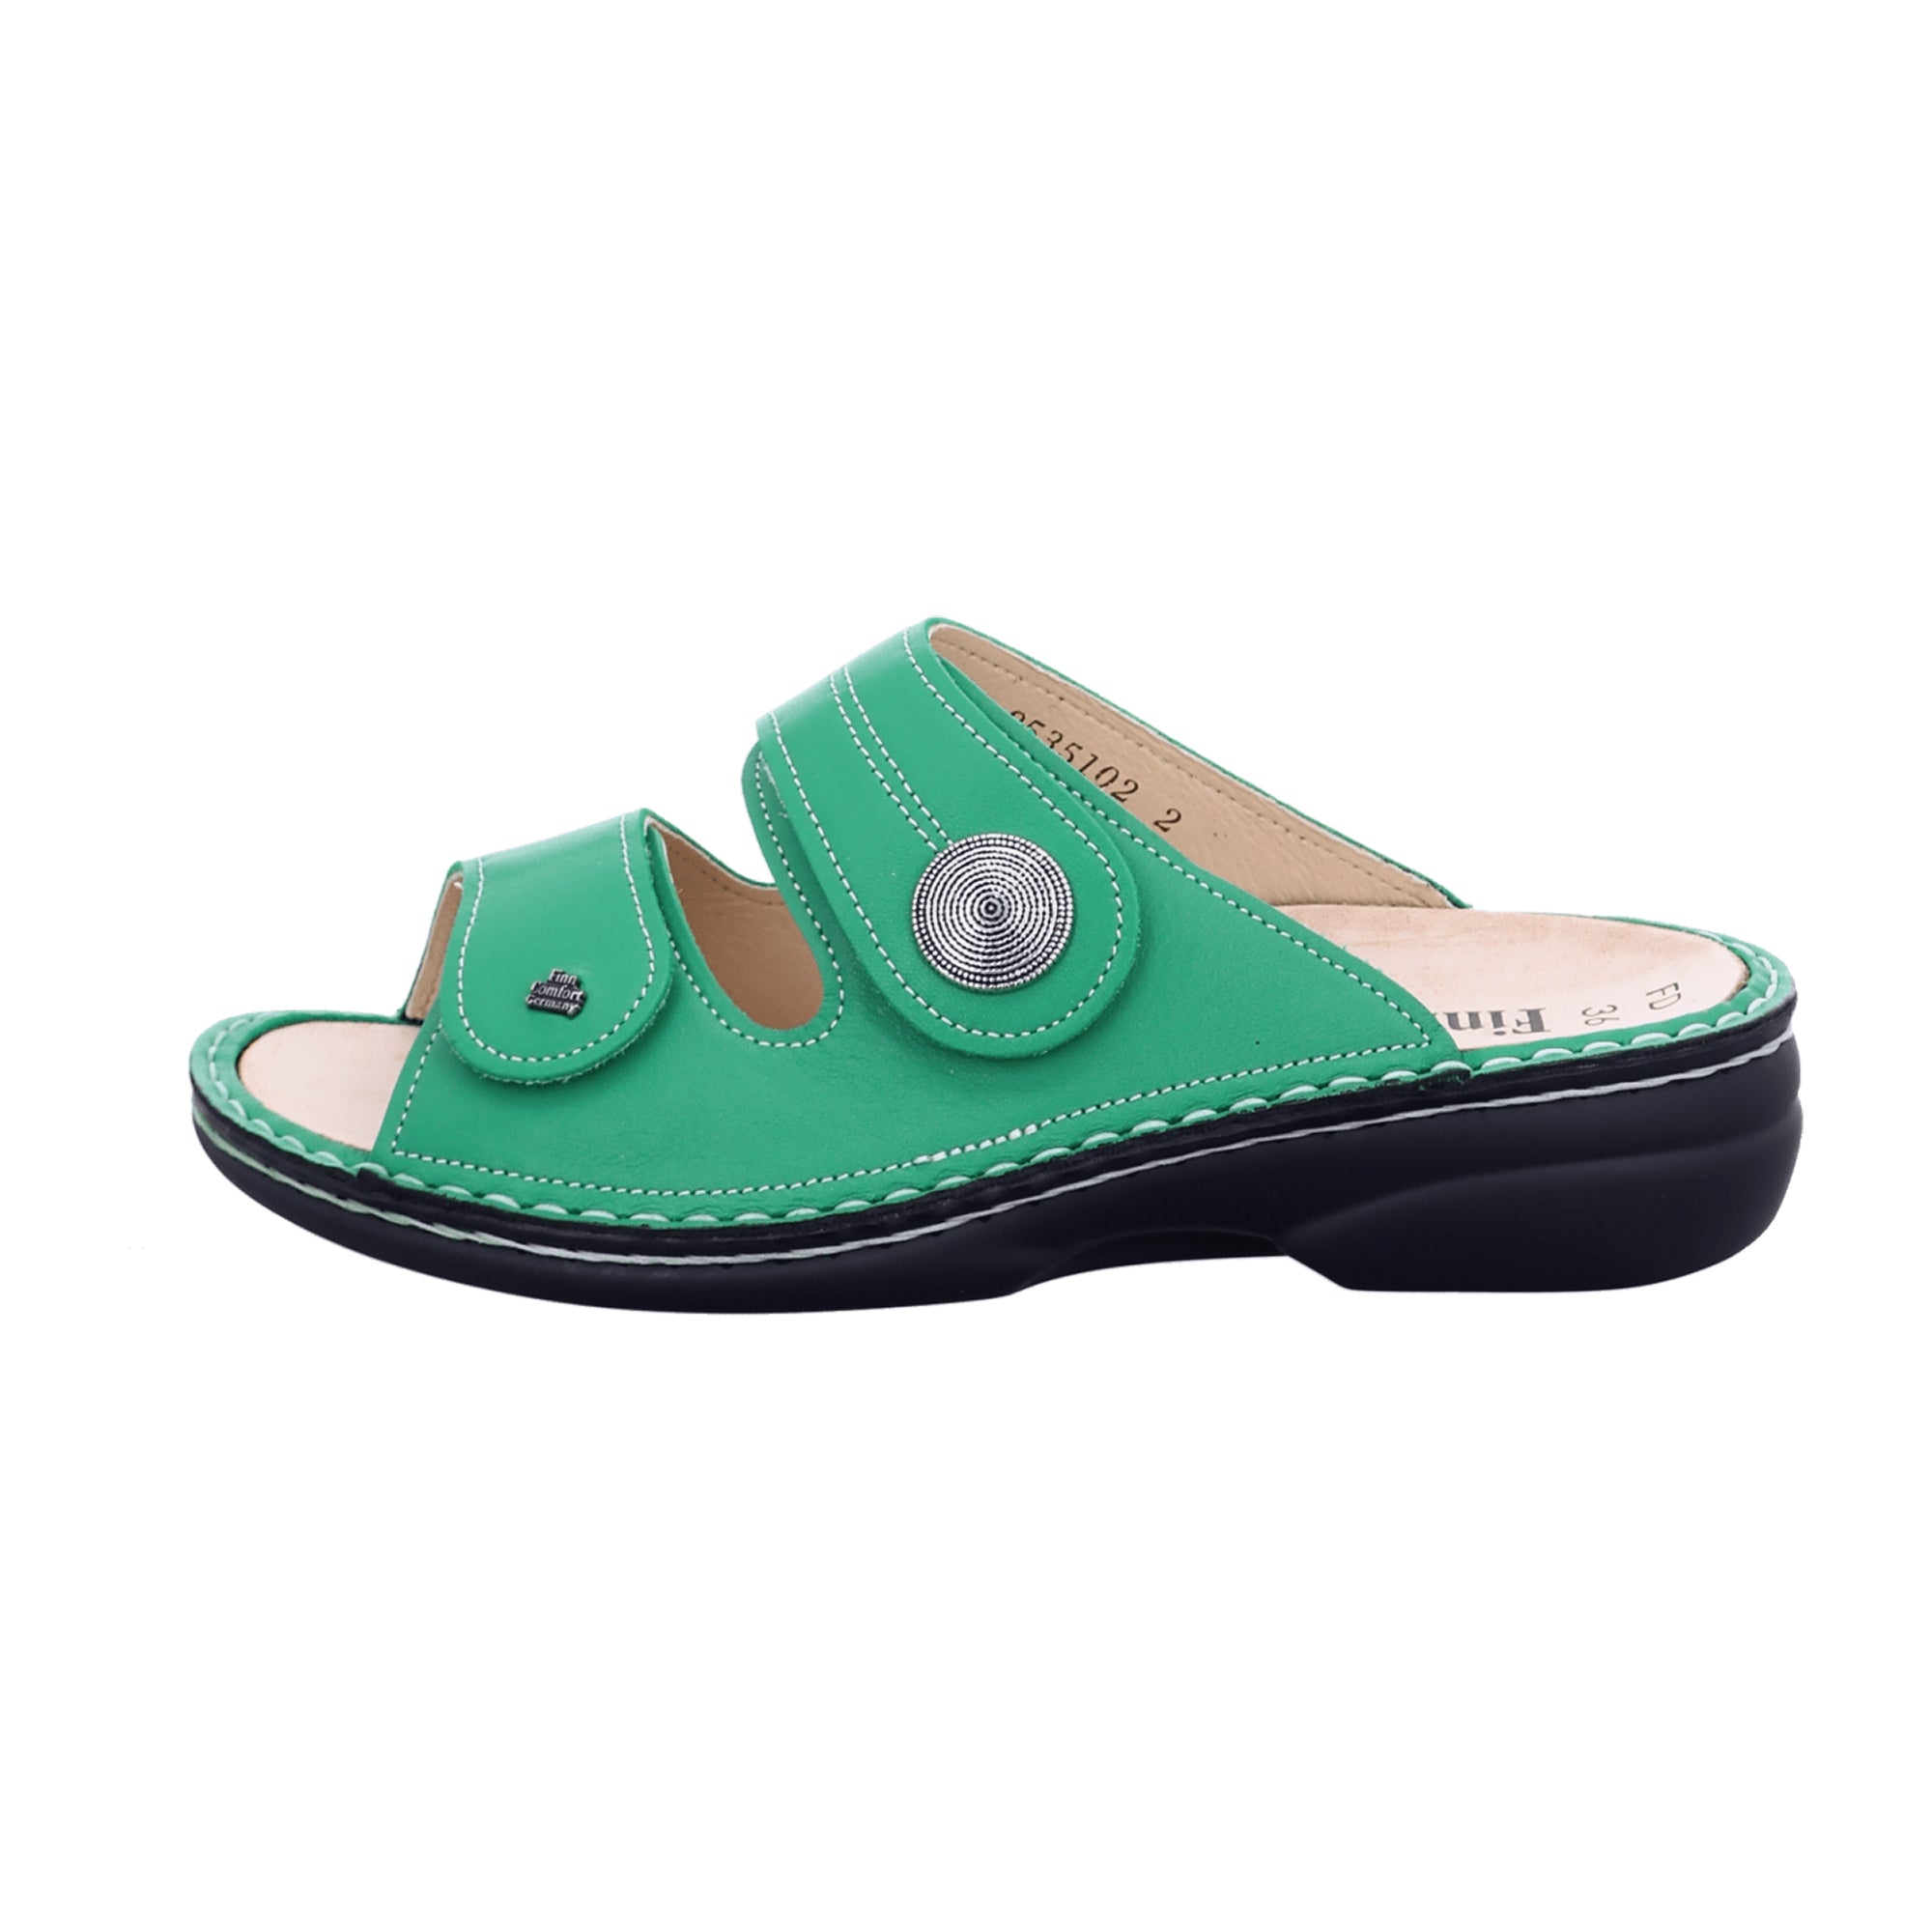 Finn Comfort Sansibar Women's Sandals - Stylish & Comfortable Green Sandals